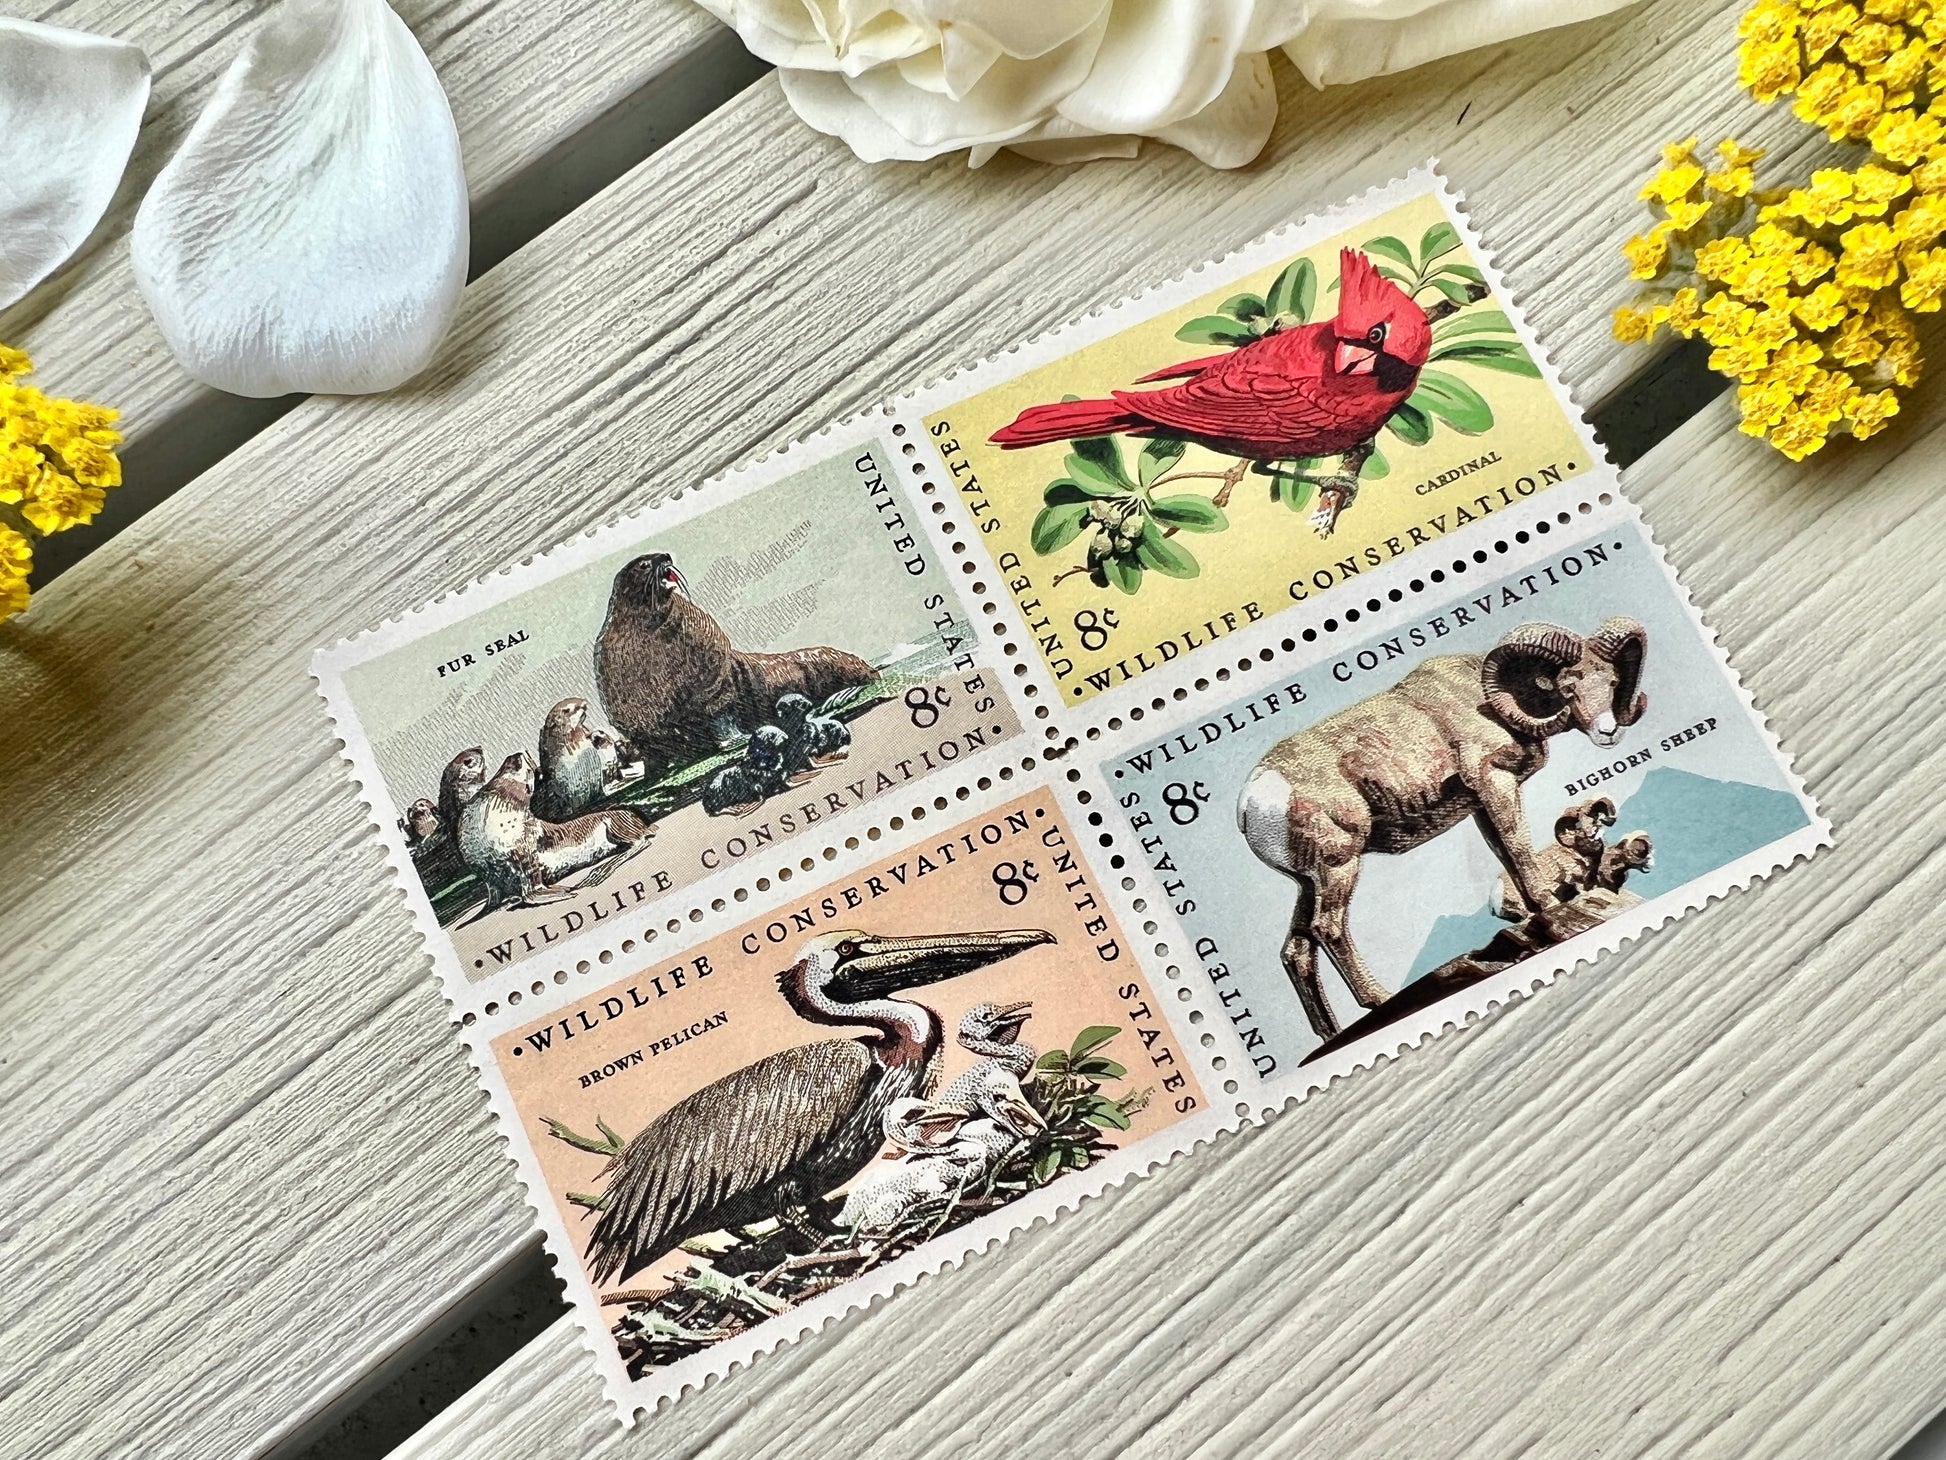 Wildlife Conservation Postage Stamps - Vintage Animal Stamps from 1972 –  studioACK